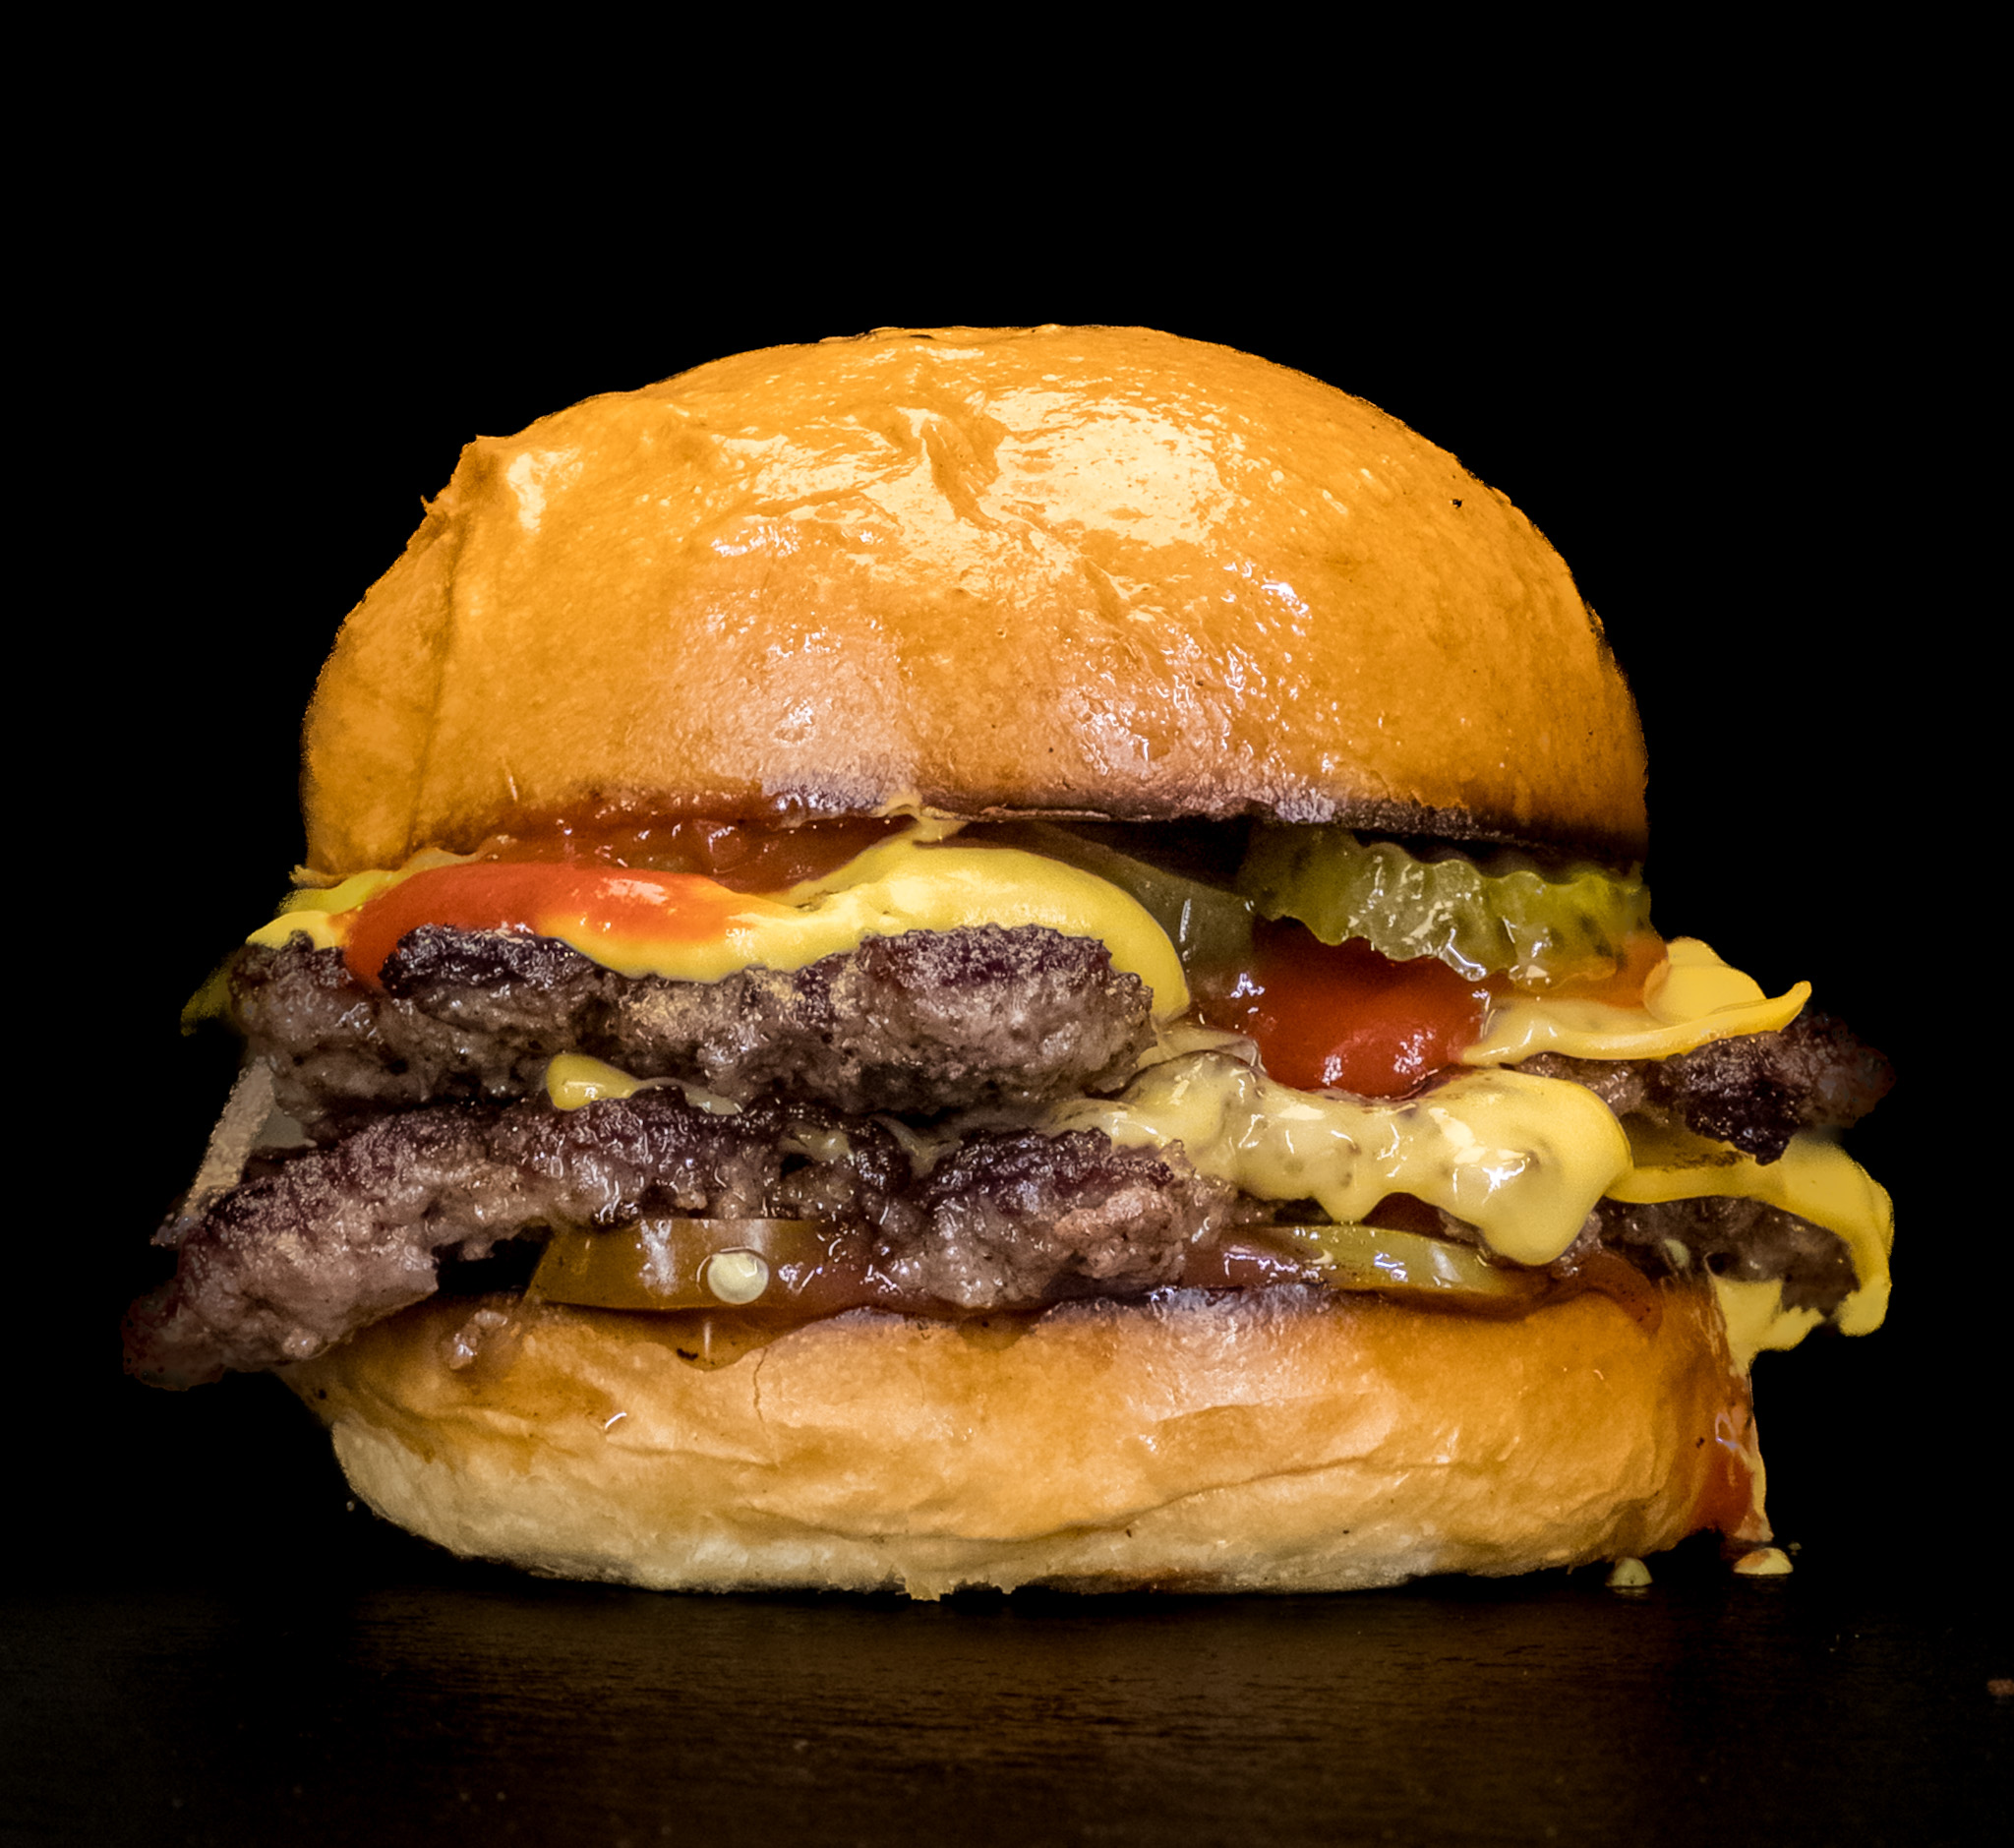 La Americana (smashed burger) 240g de carne